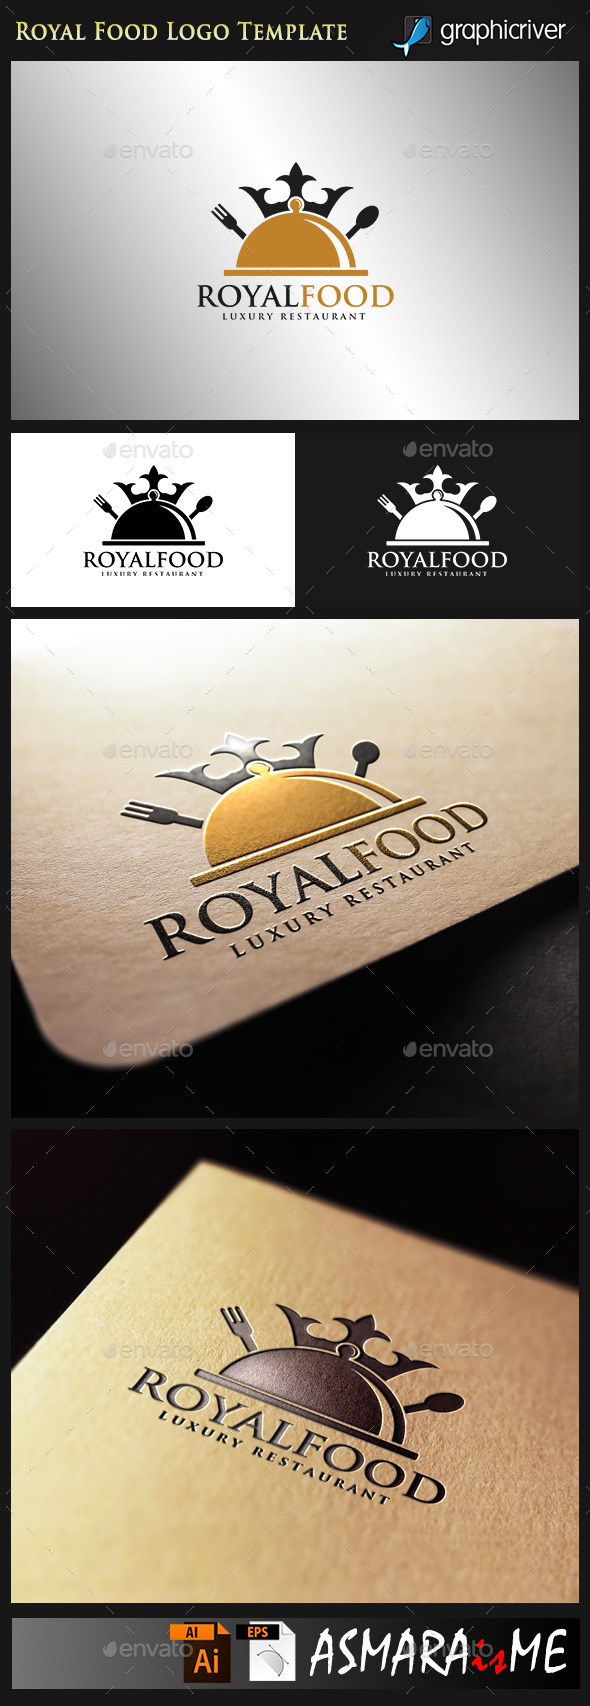 Food Logo - Royal Food - Luxury Restaurant